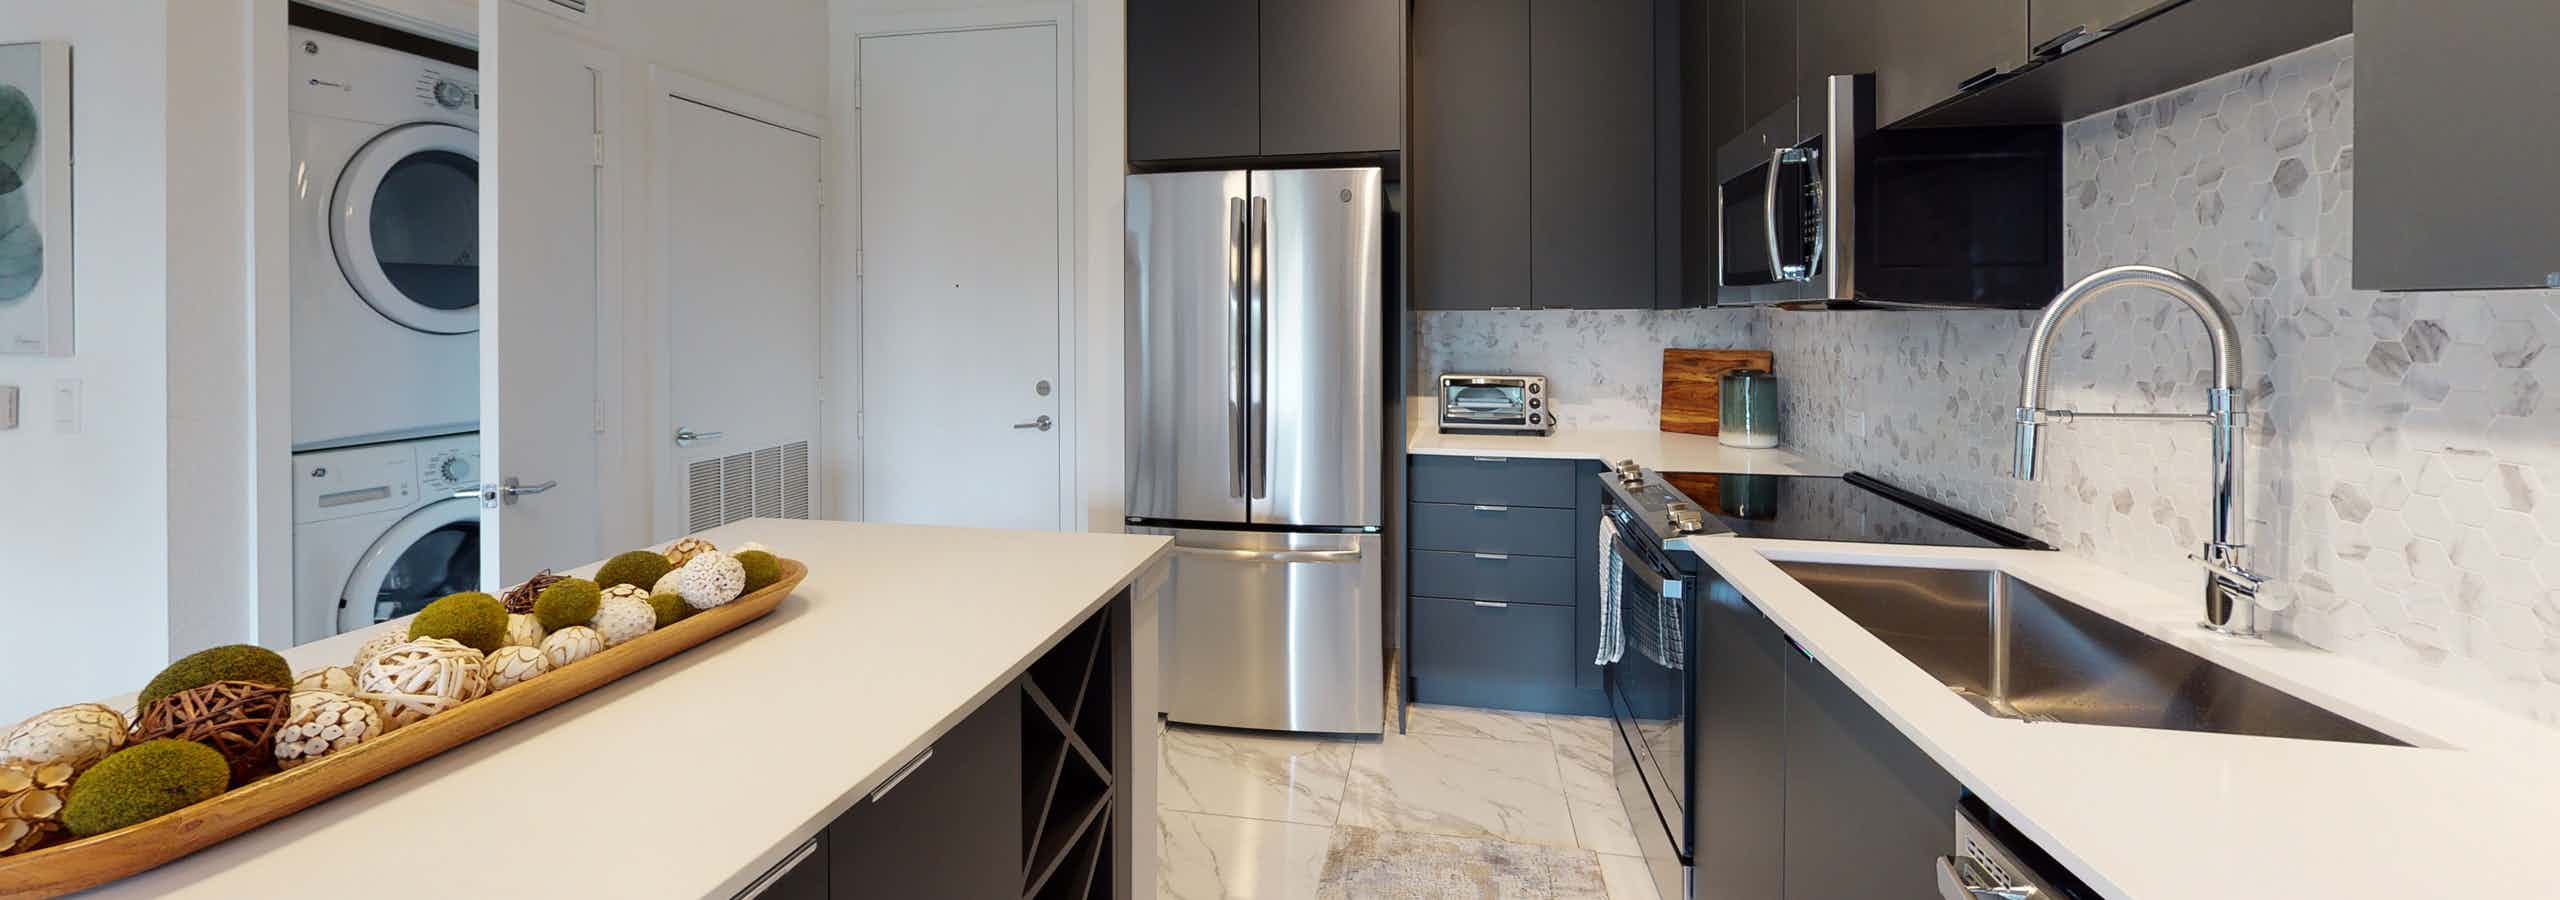 Island kitchen with elegant quartz countertops